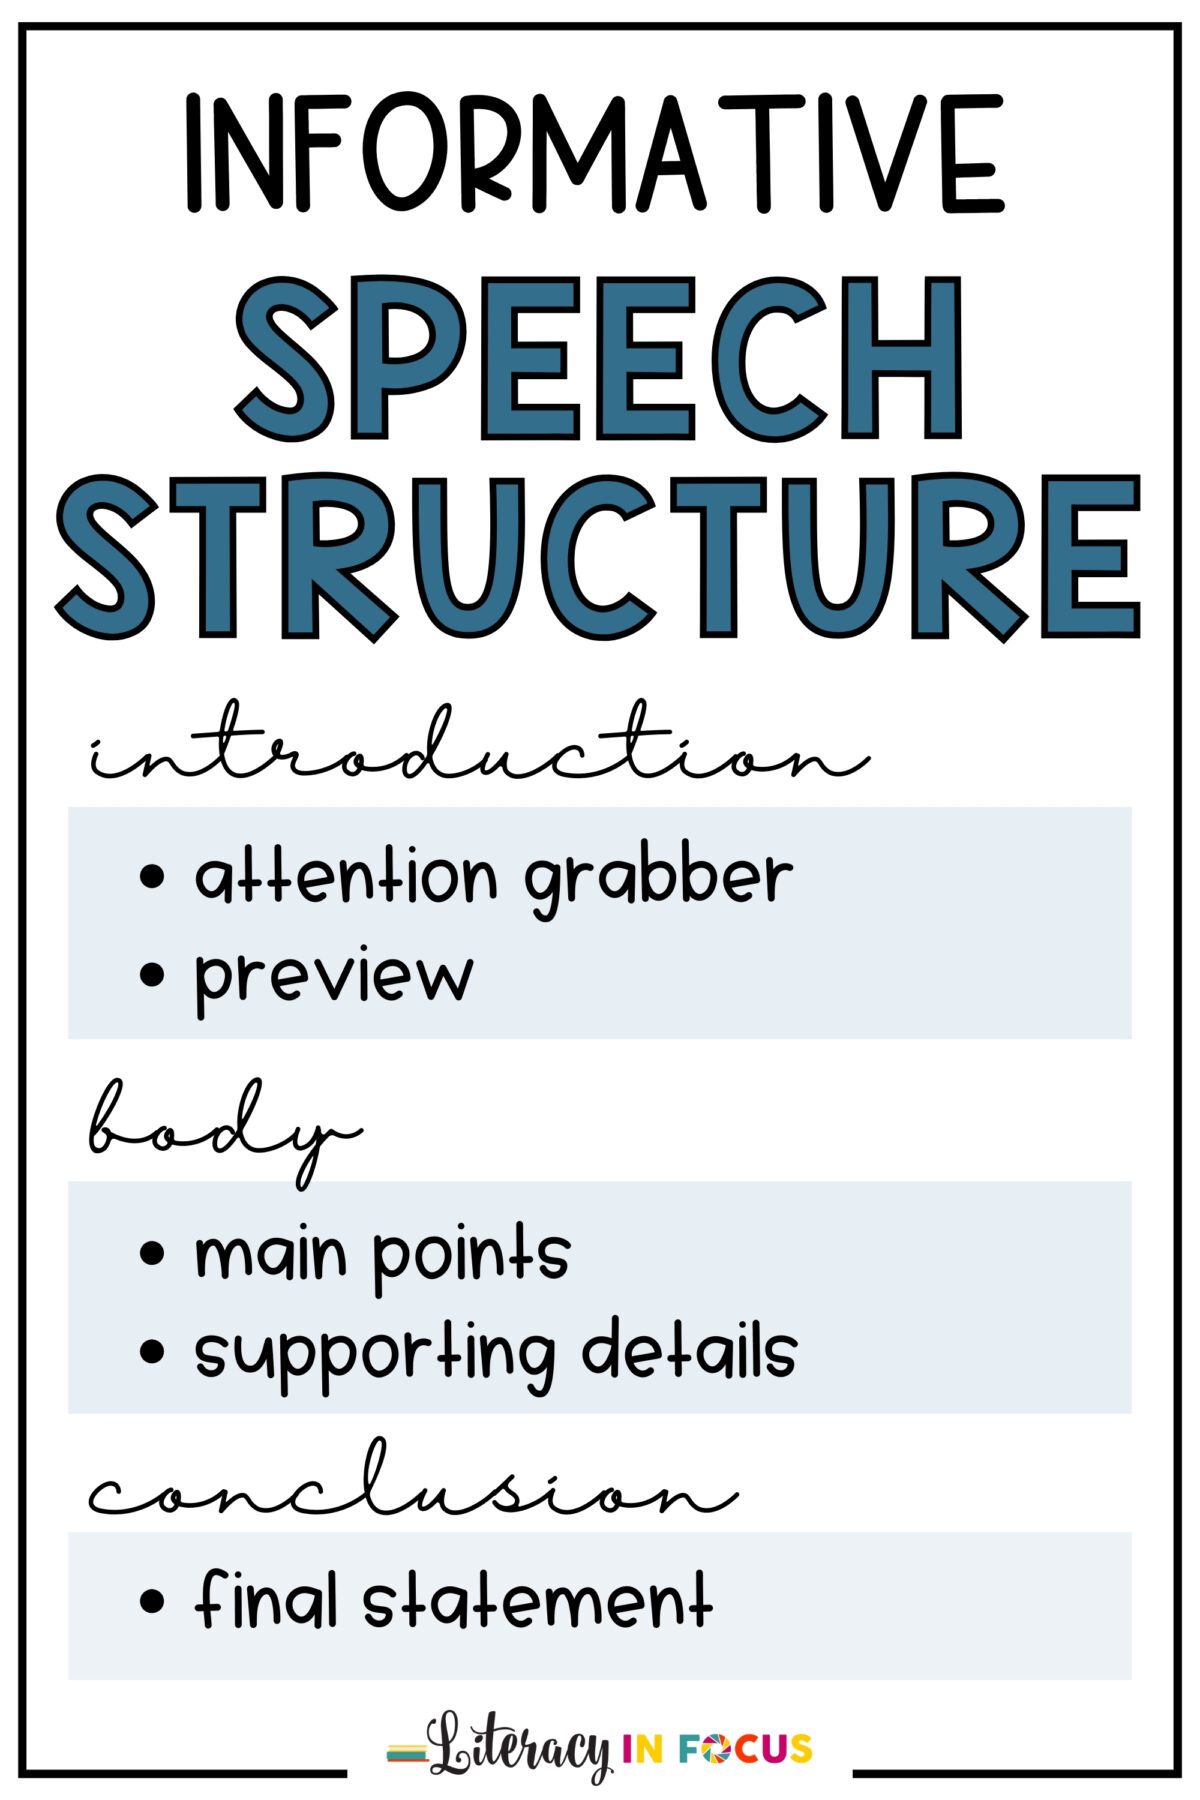 informative speech structure